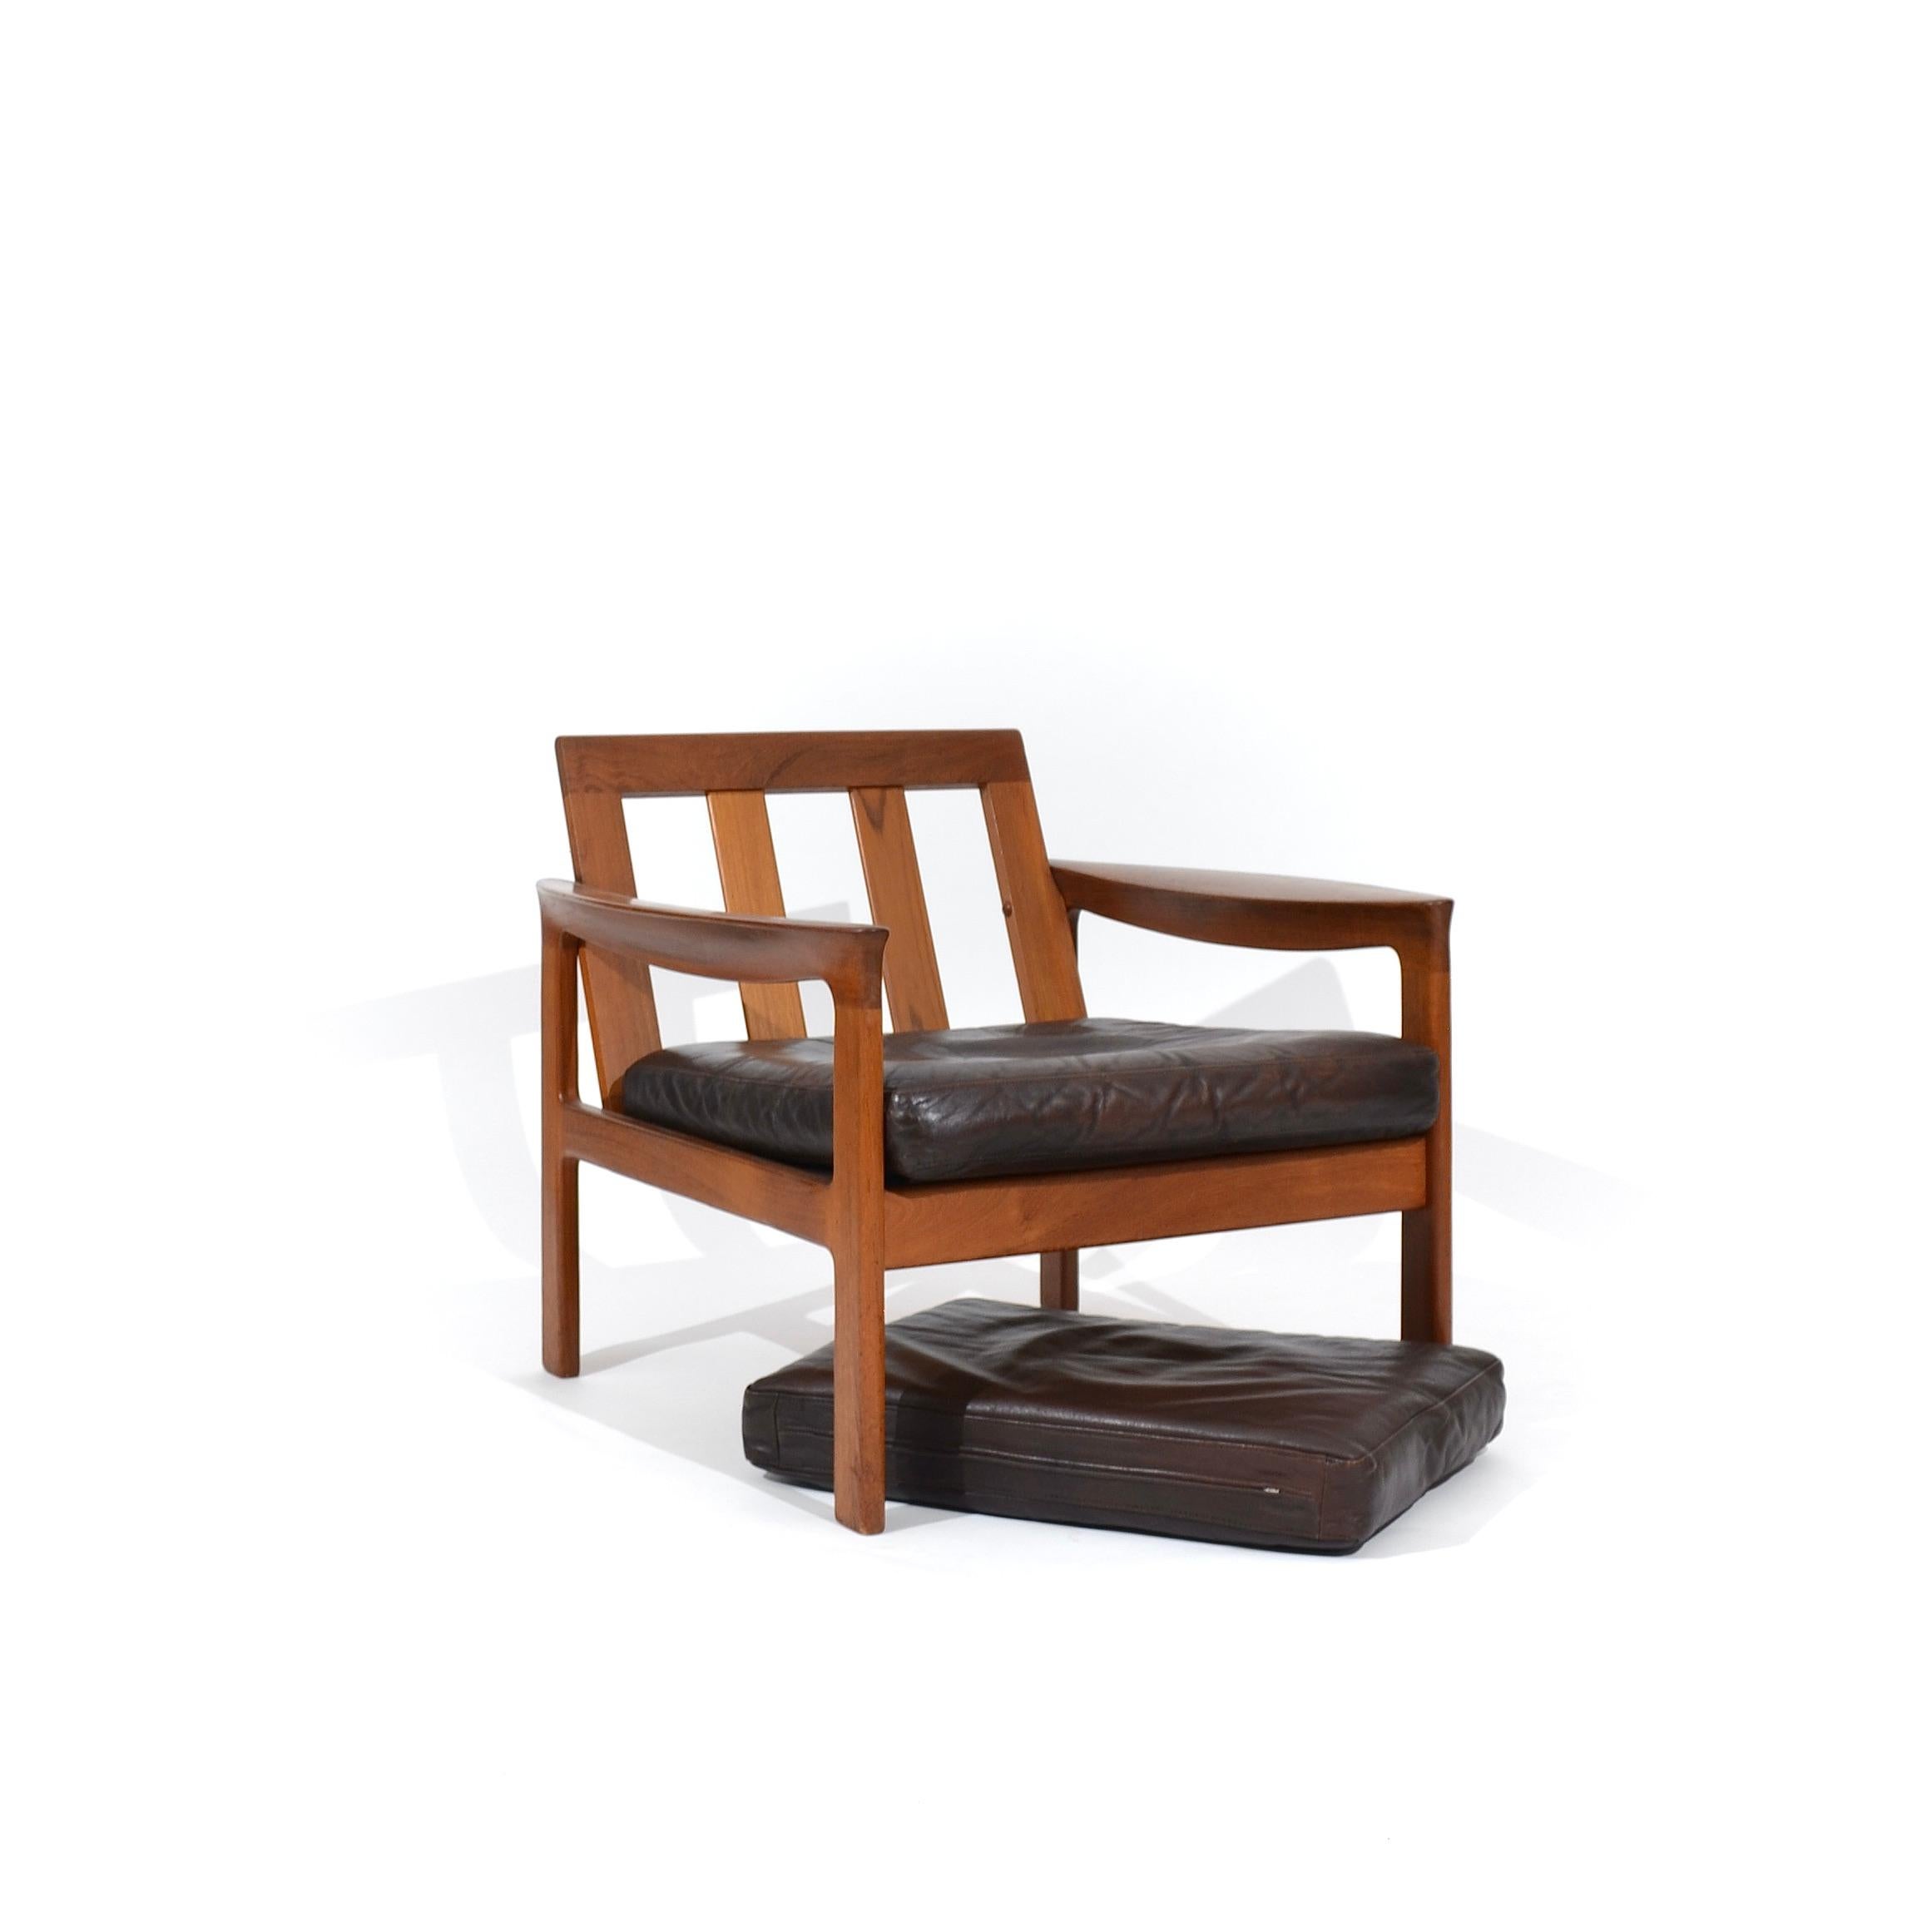 Mid-20th Century Leather and teak armchair, Arne Wahl Iversen, Komfort, Denmark, 1960's For Sale